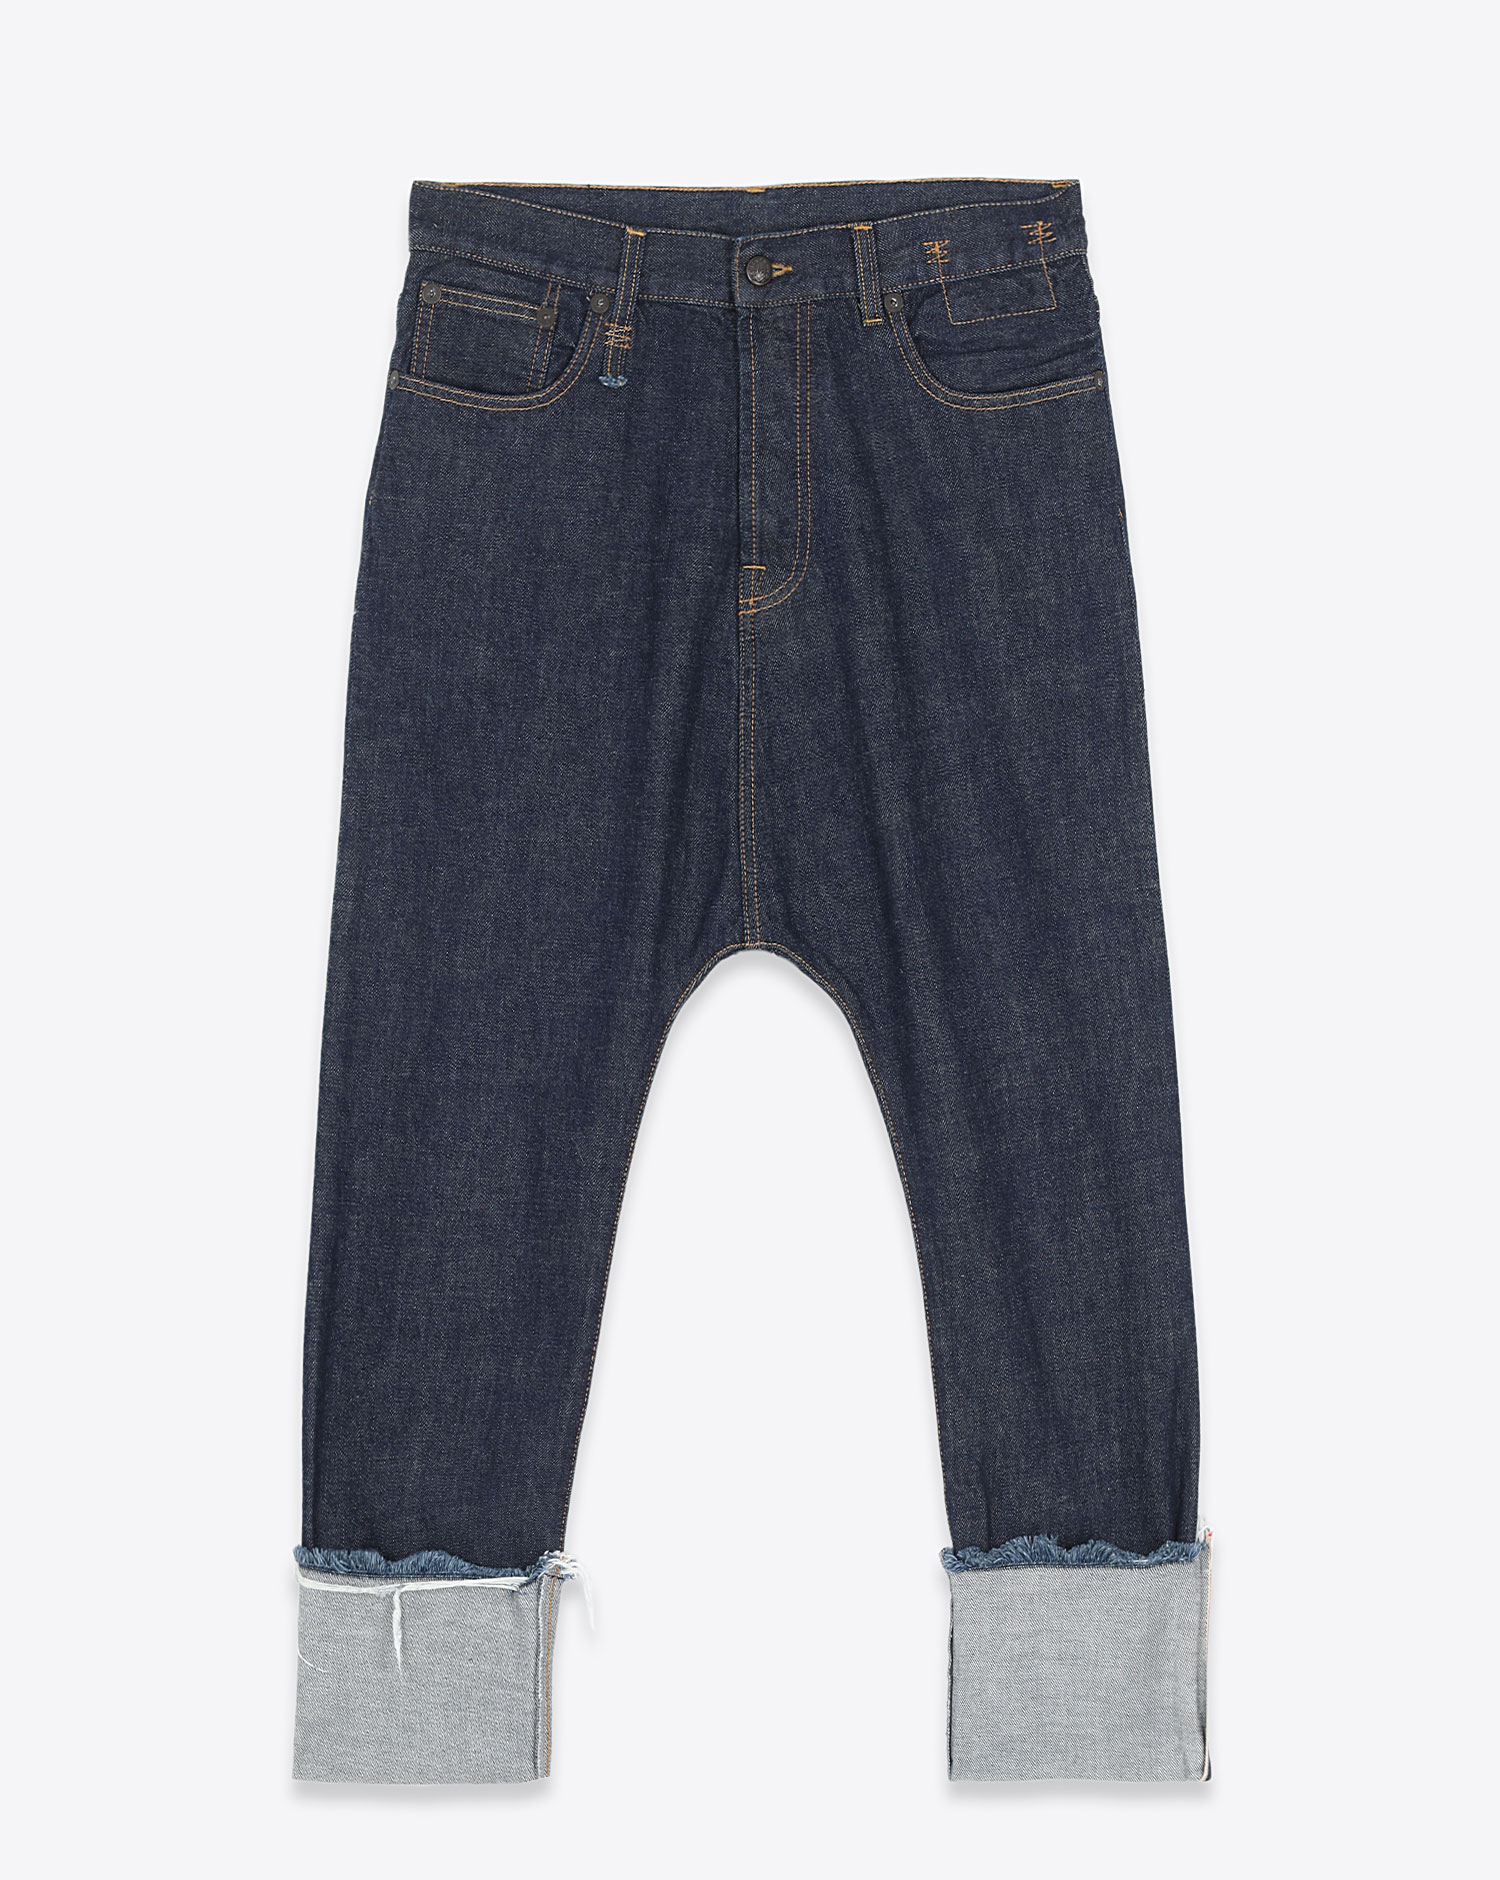 Jeans Tailored Drop R13 Denim en denim indigo.